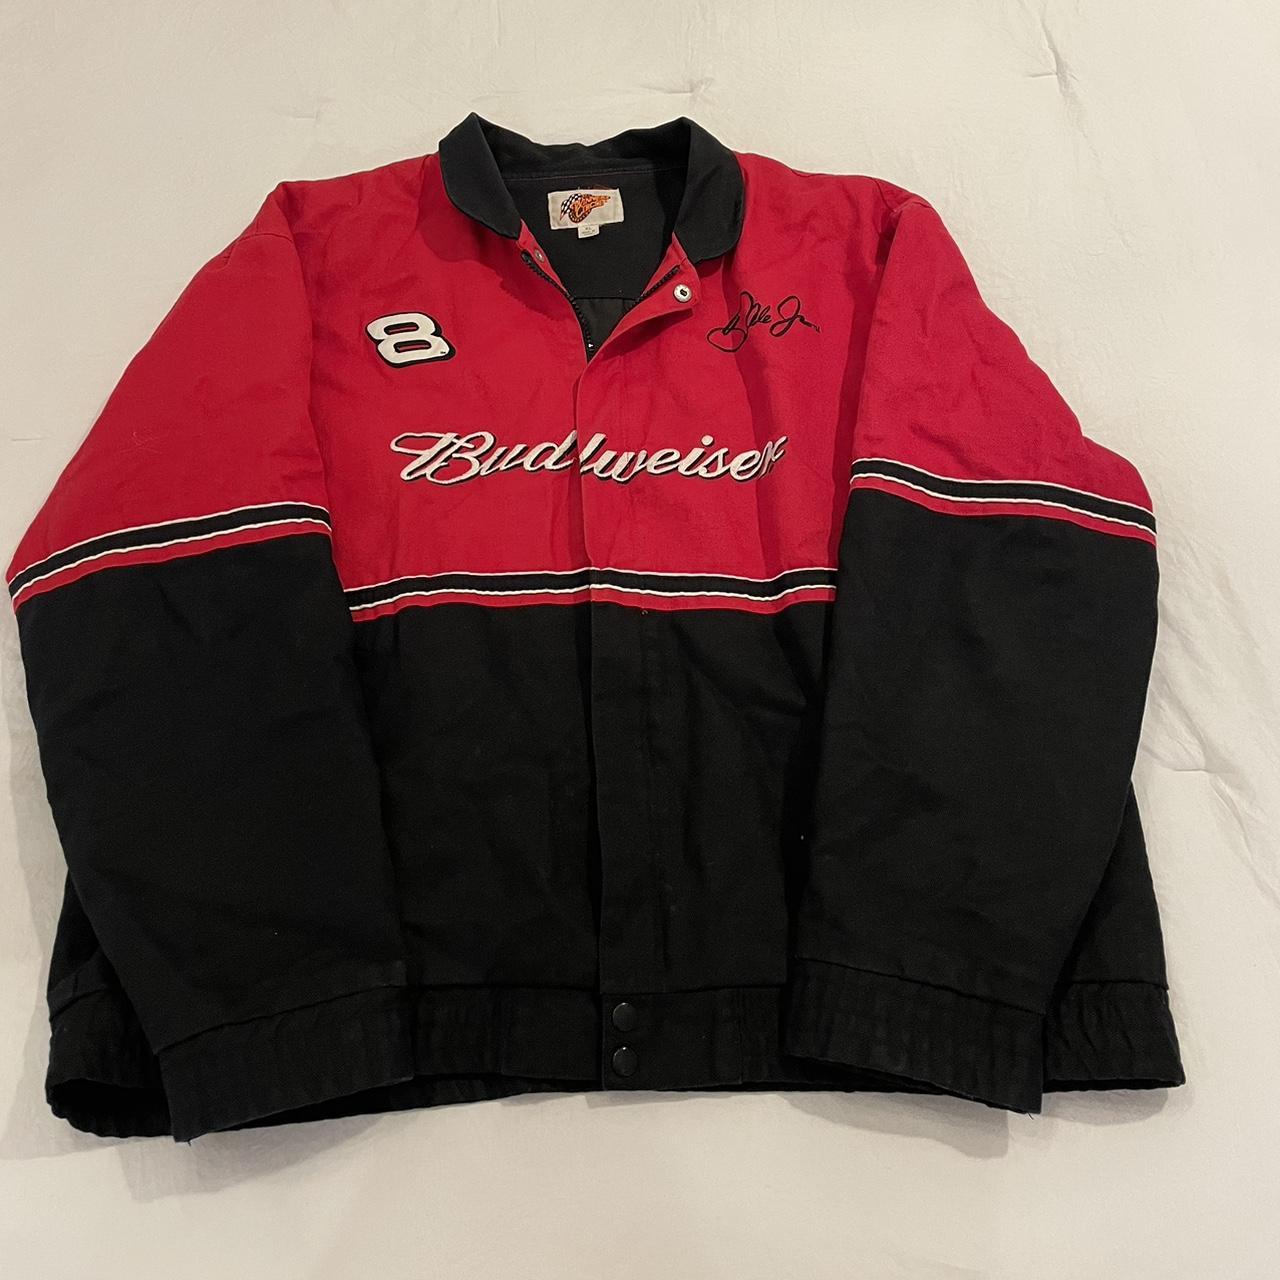 Budweiser Women's Red and Black Jacket | Depop